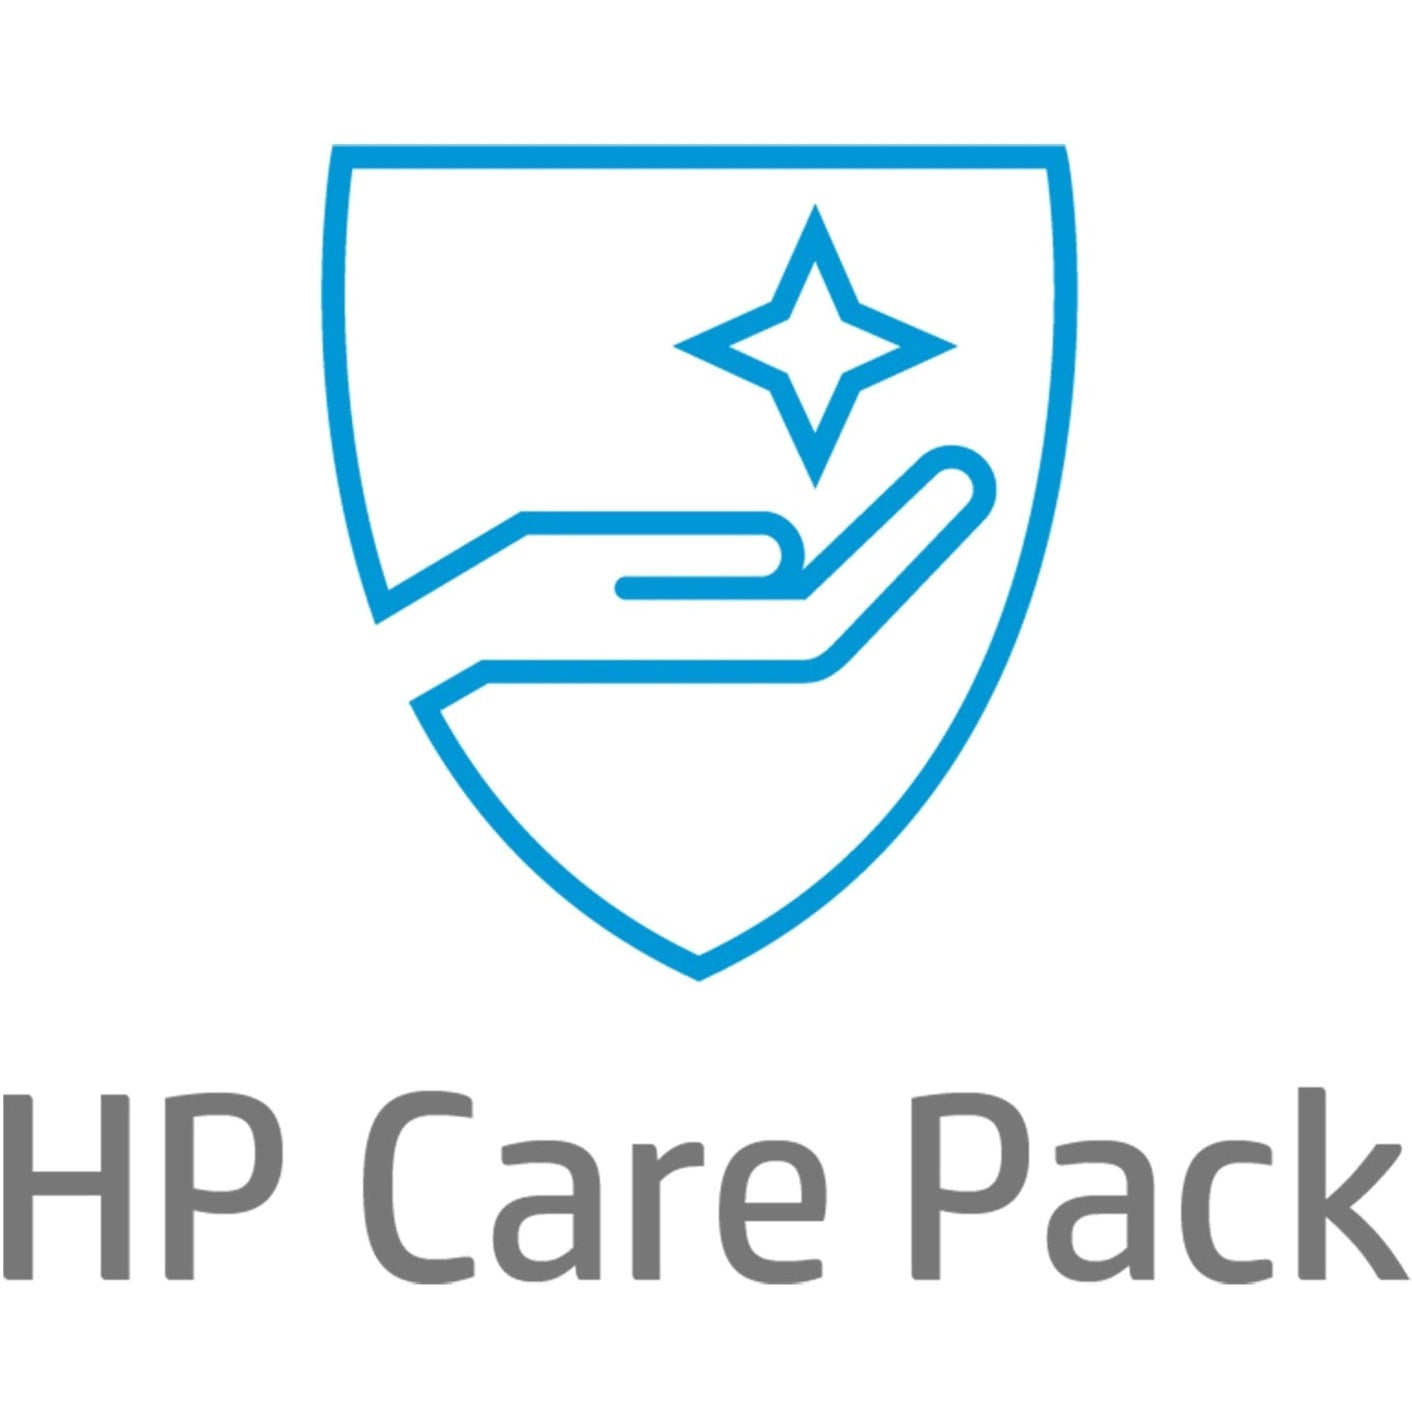 HP Care Pack - 3 Year - Warranty (UQ831E)